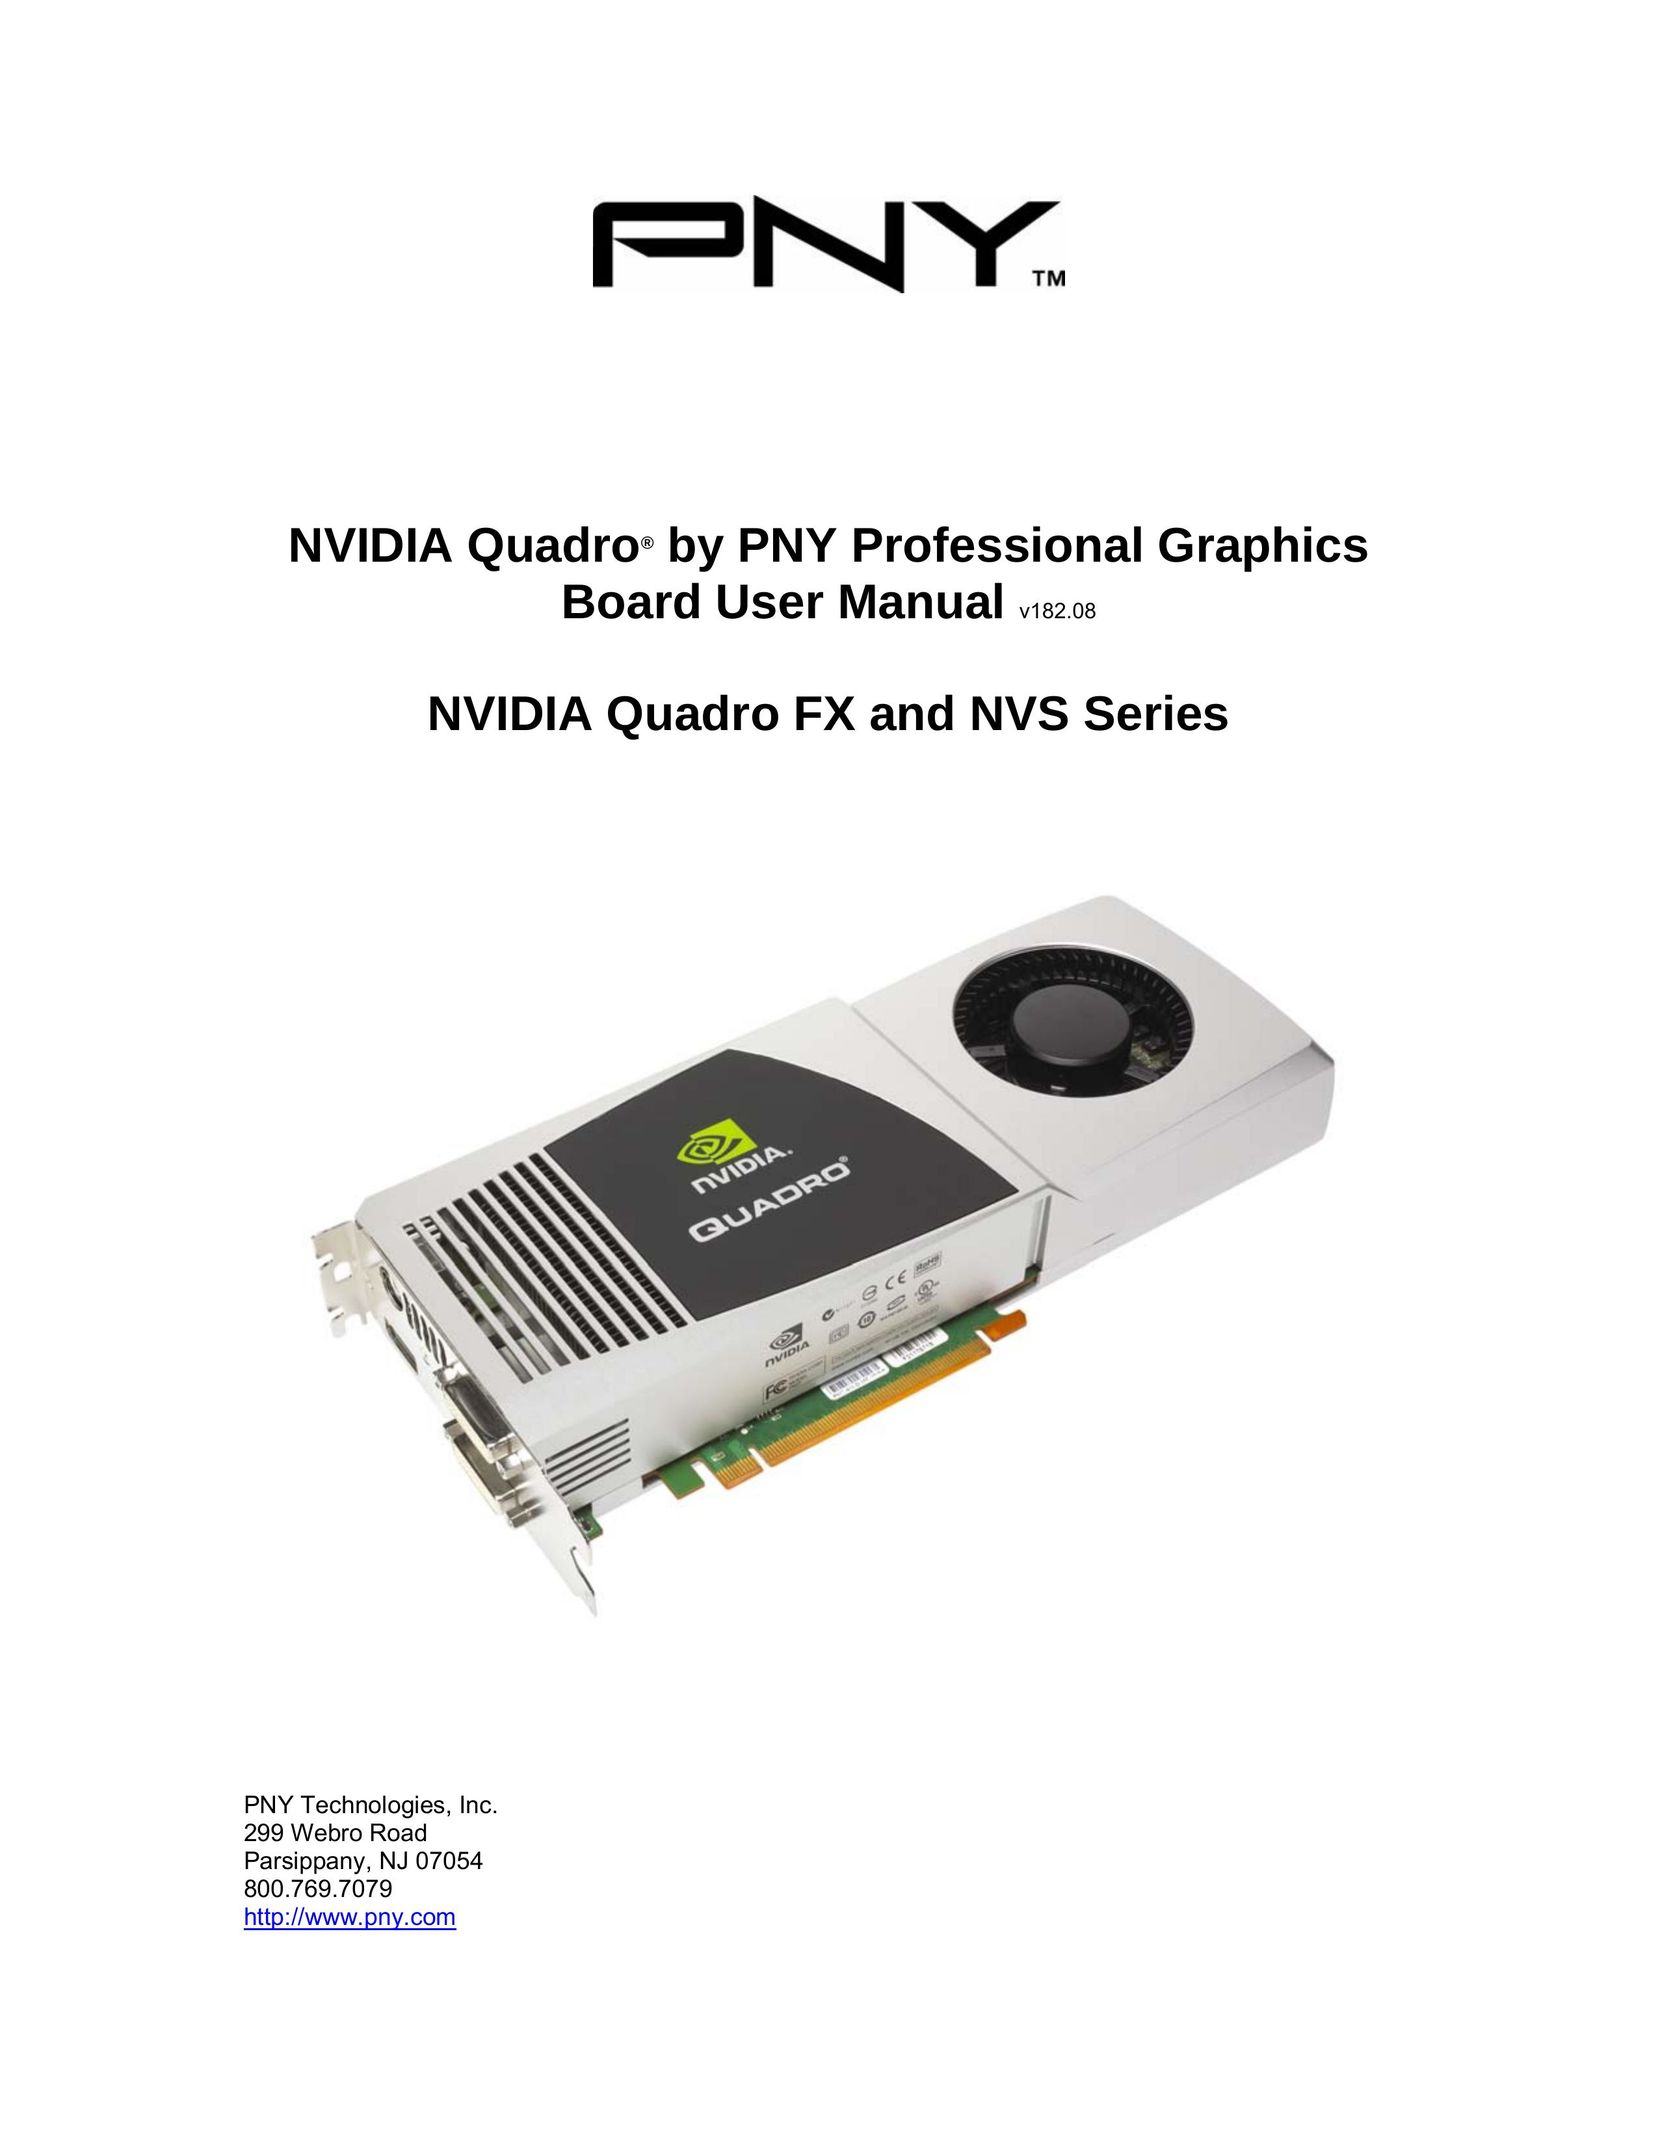 PNY NVS 290 Computer Hardware User Manual